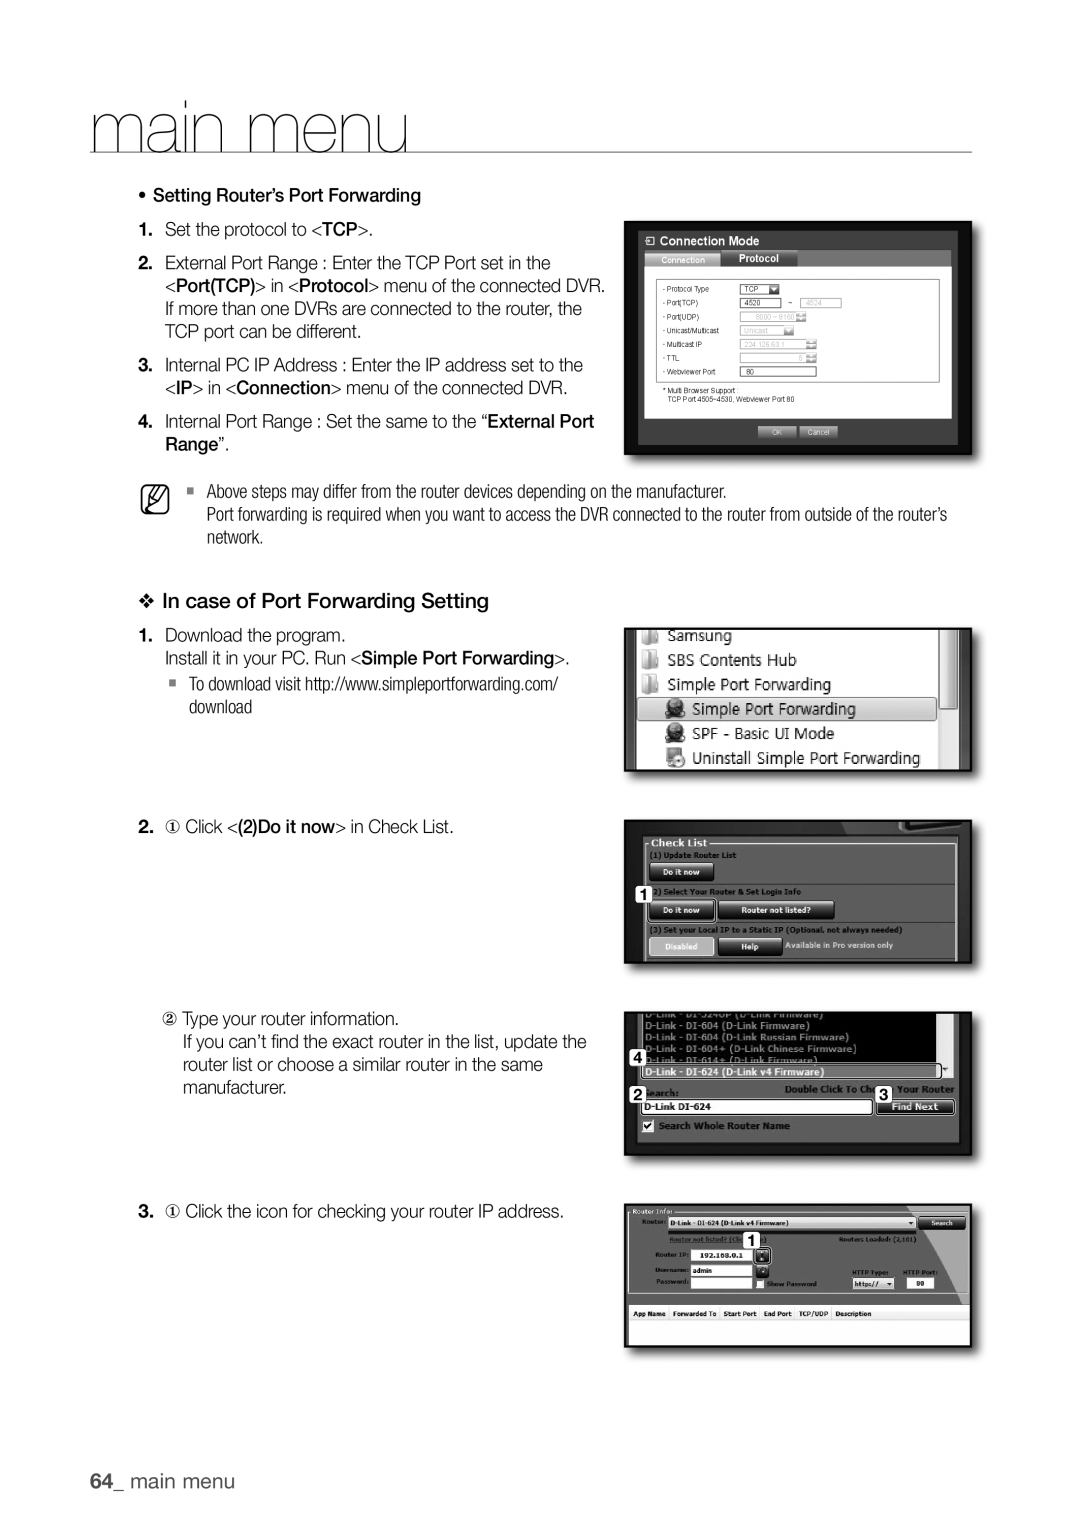 Samsung SDR3100 user manual in case of Port Forwarding Setting, 64_ main menu 